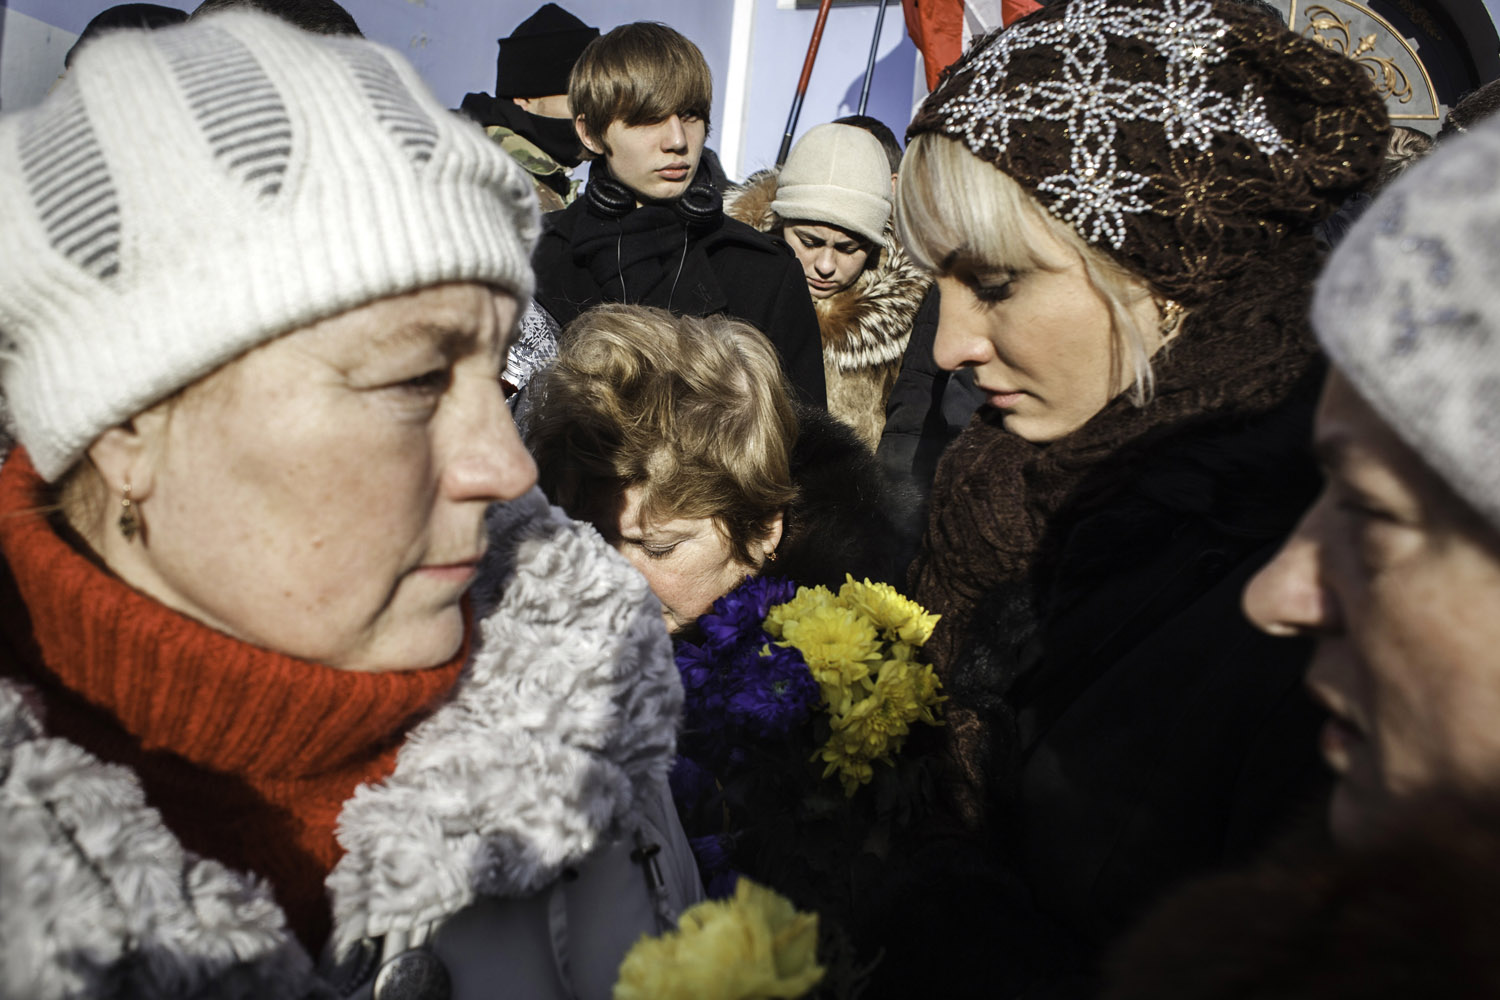 Ukraine: Funeral in Kiev